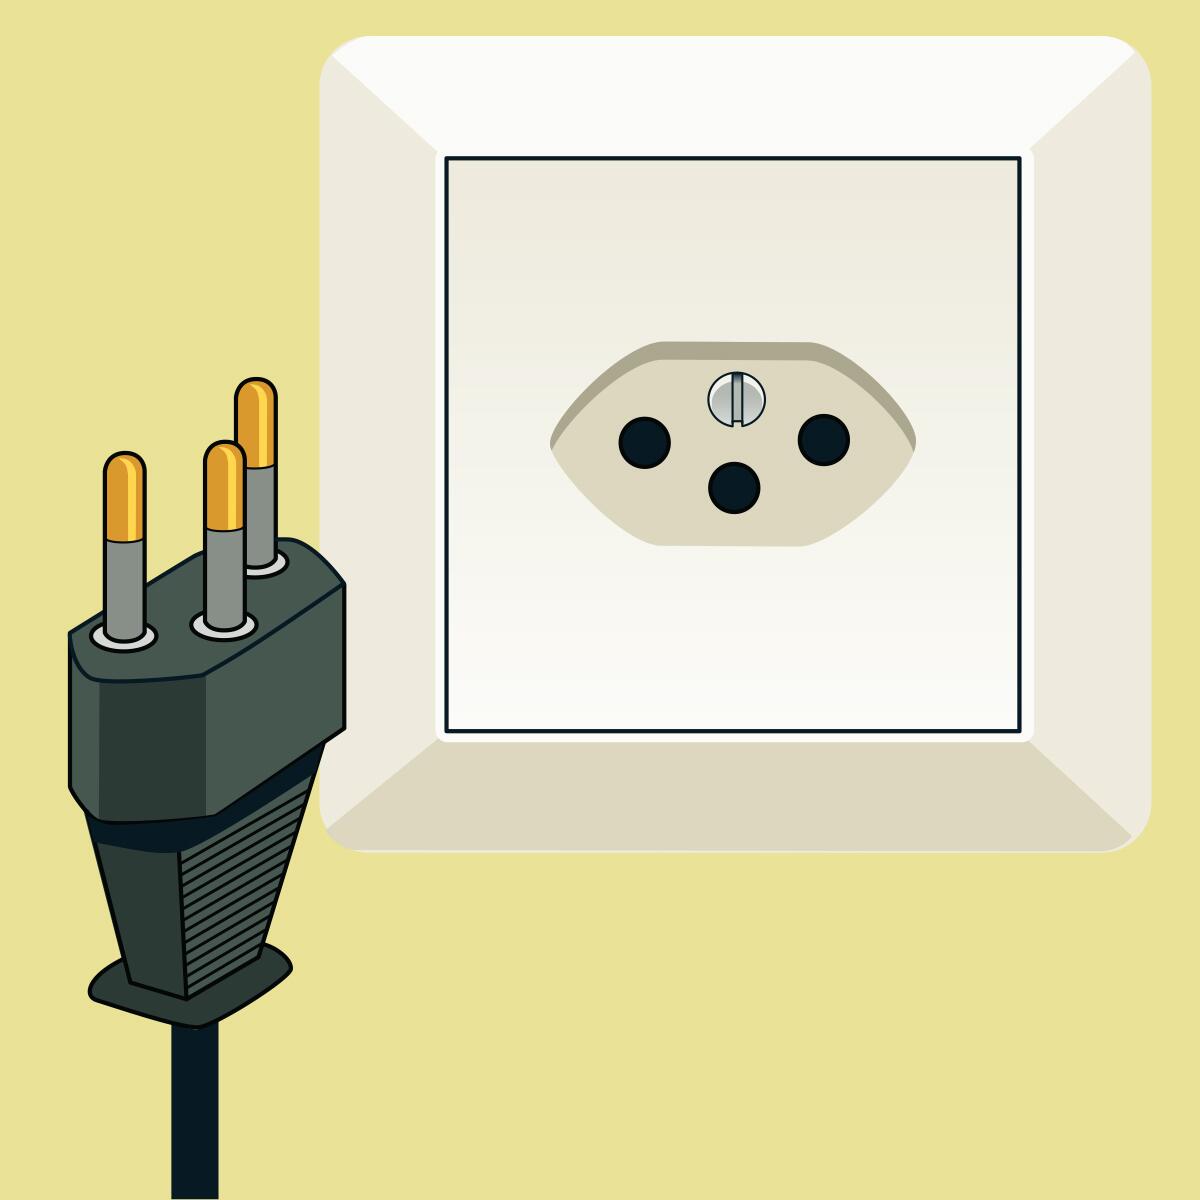 Type J plug and socket